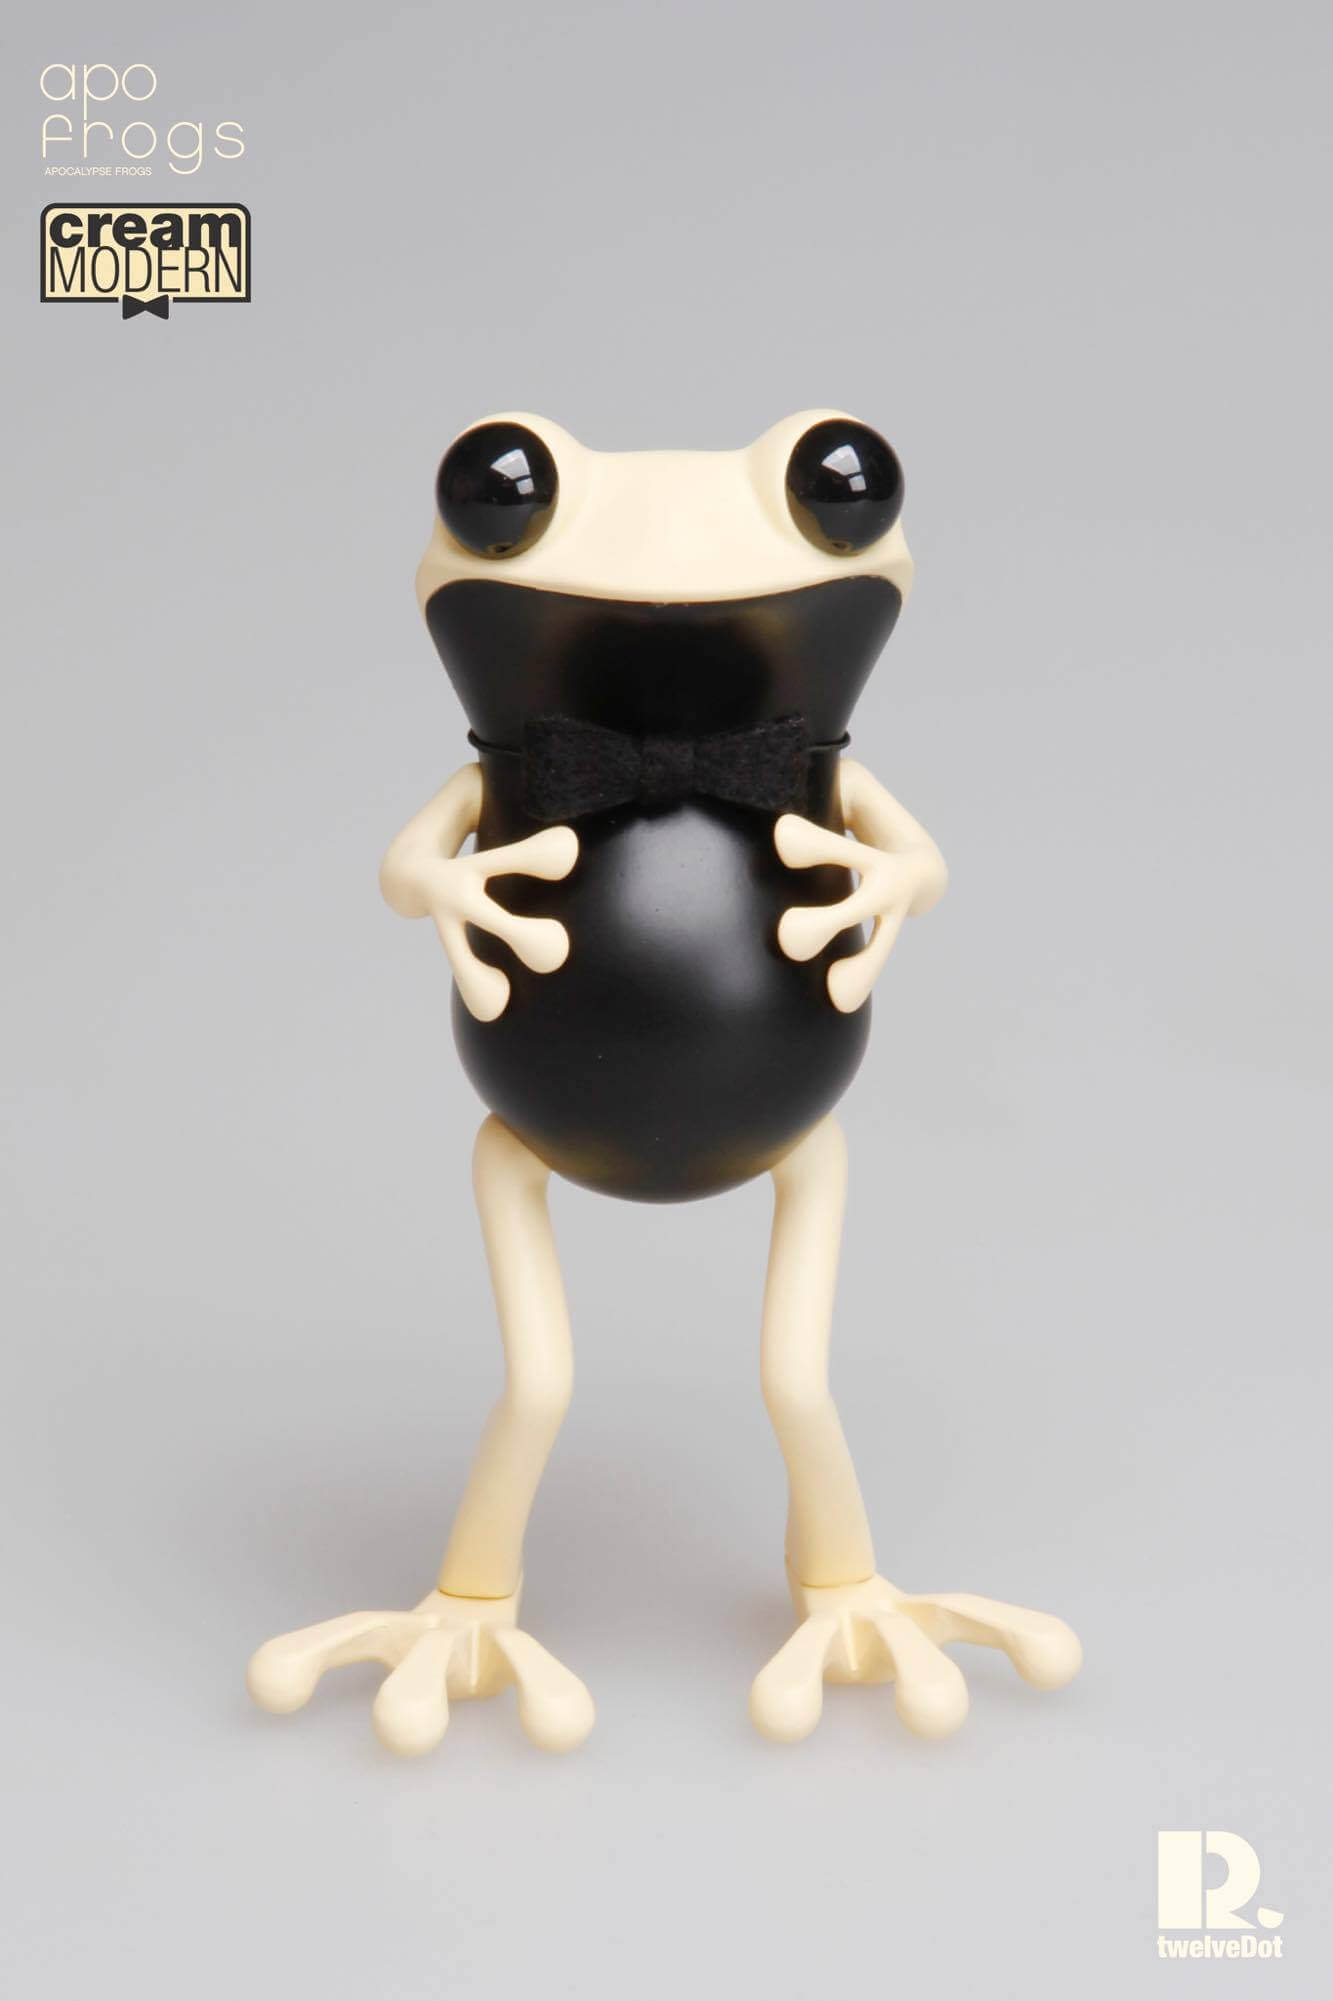 cream-modern-apo-frog-by-twelvedot-full-the-toy-chronicle